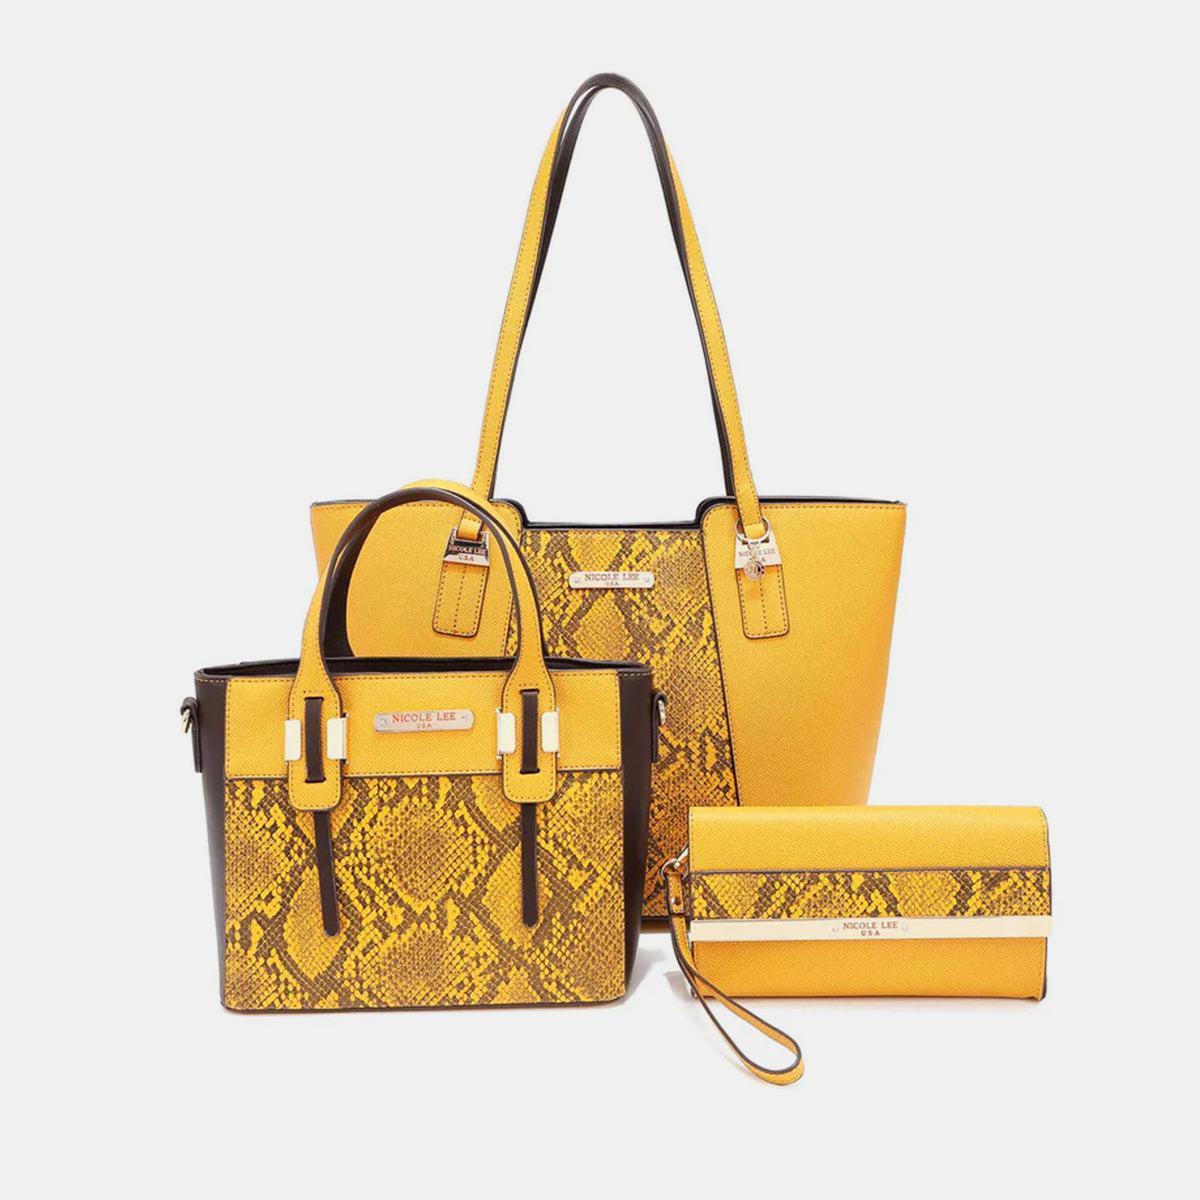 a yellow snake skin purse and matching handbag